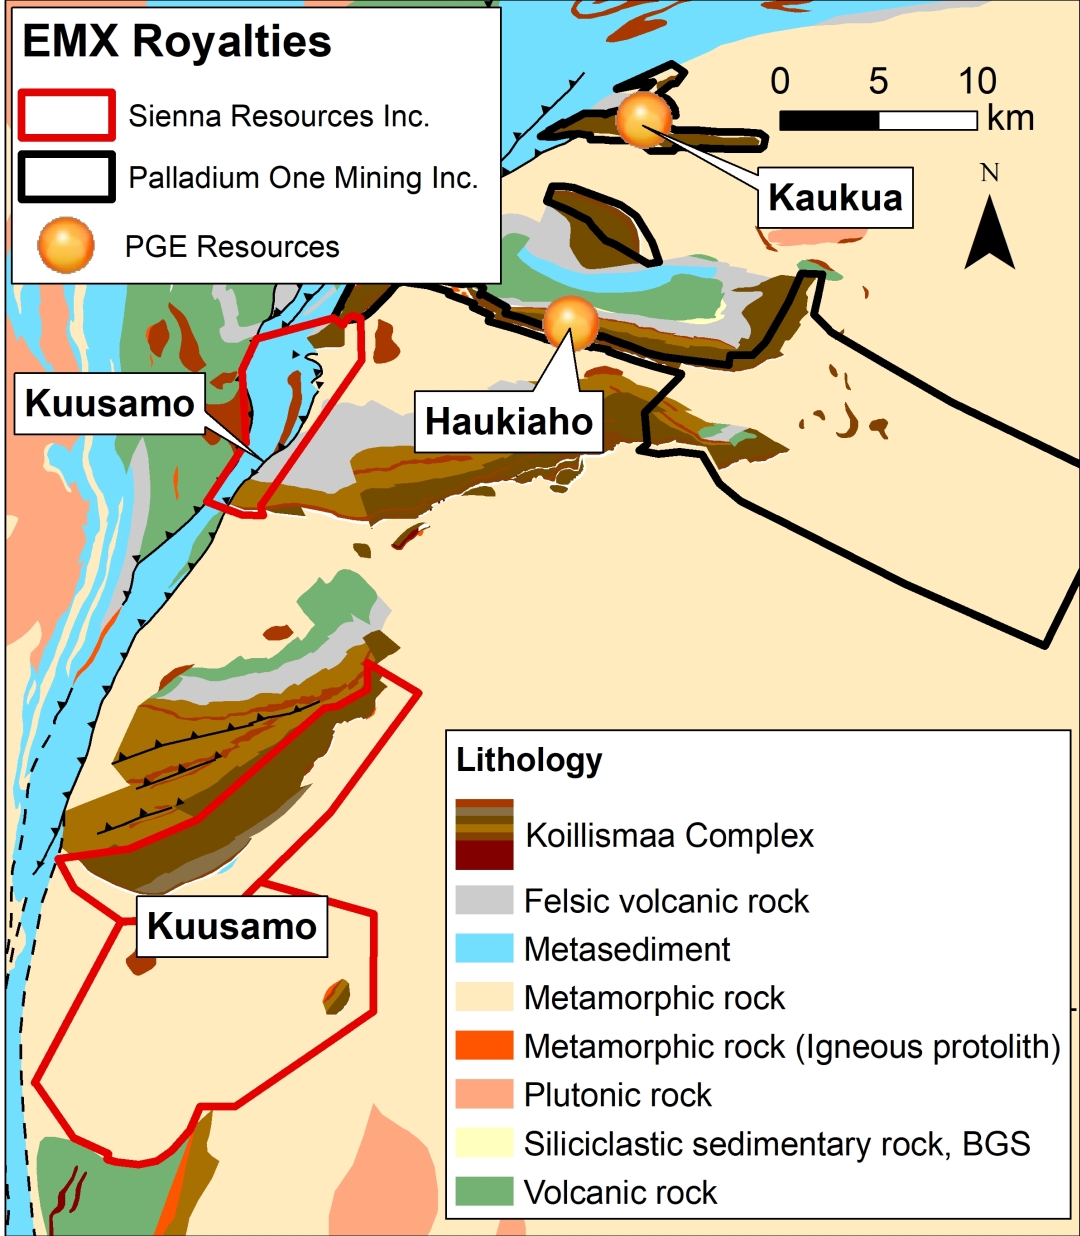 Location and geology of the Kuusamo and Kaukua properties.